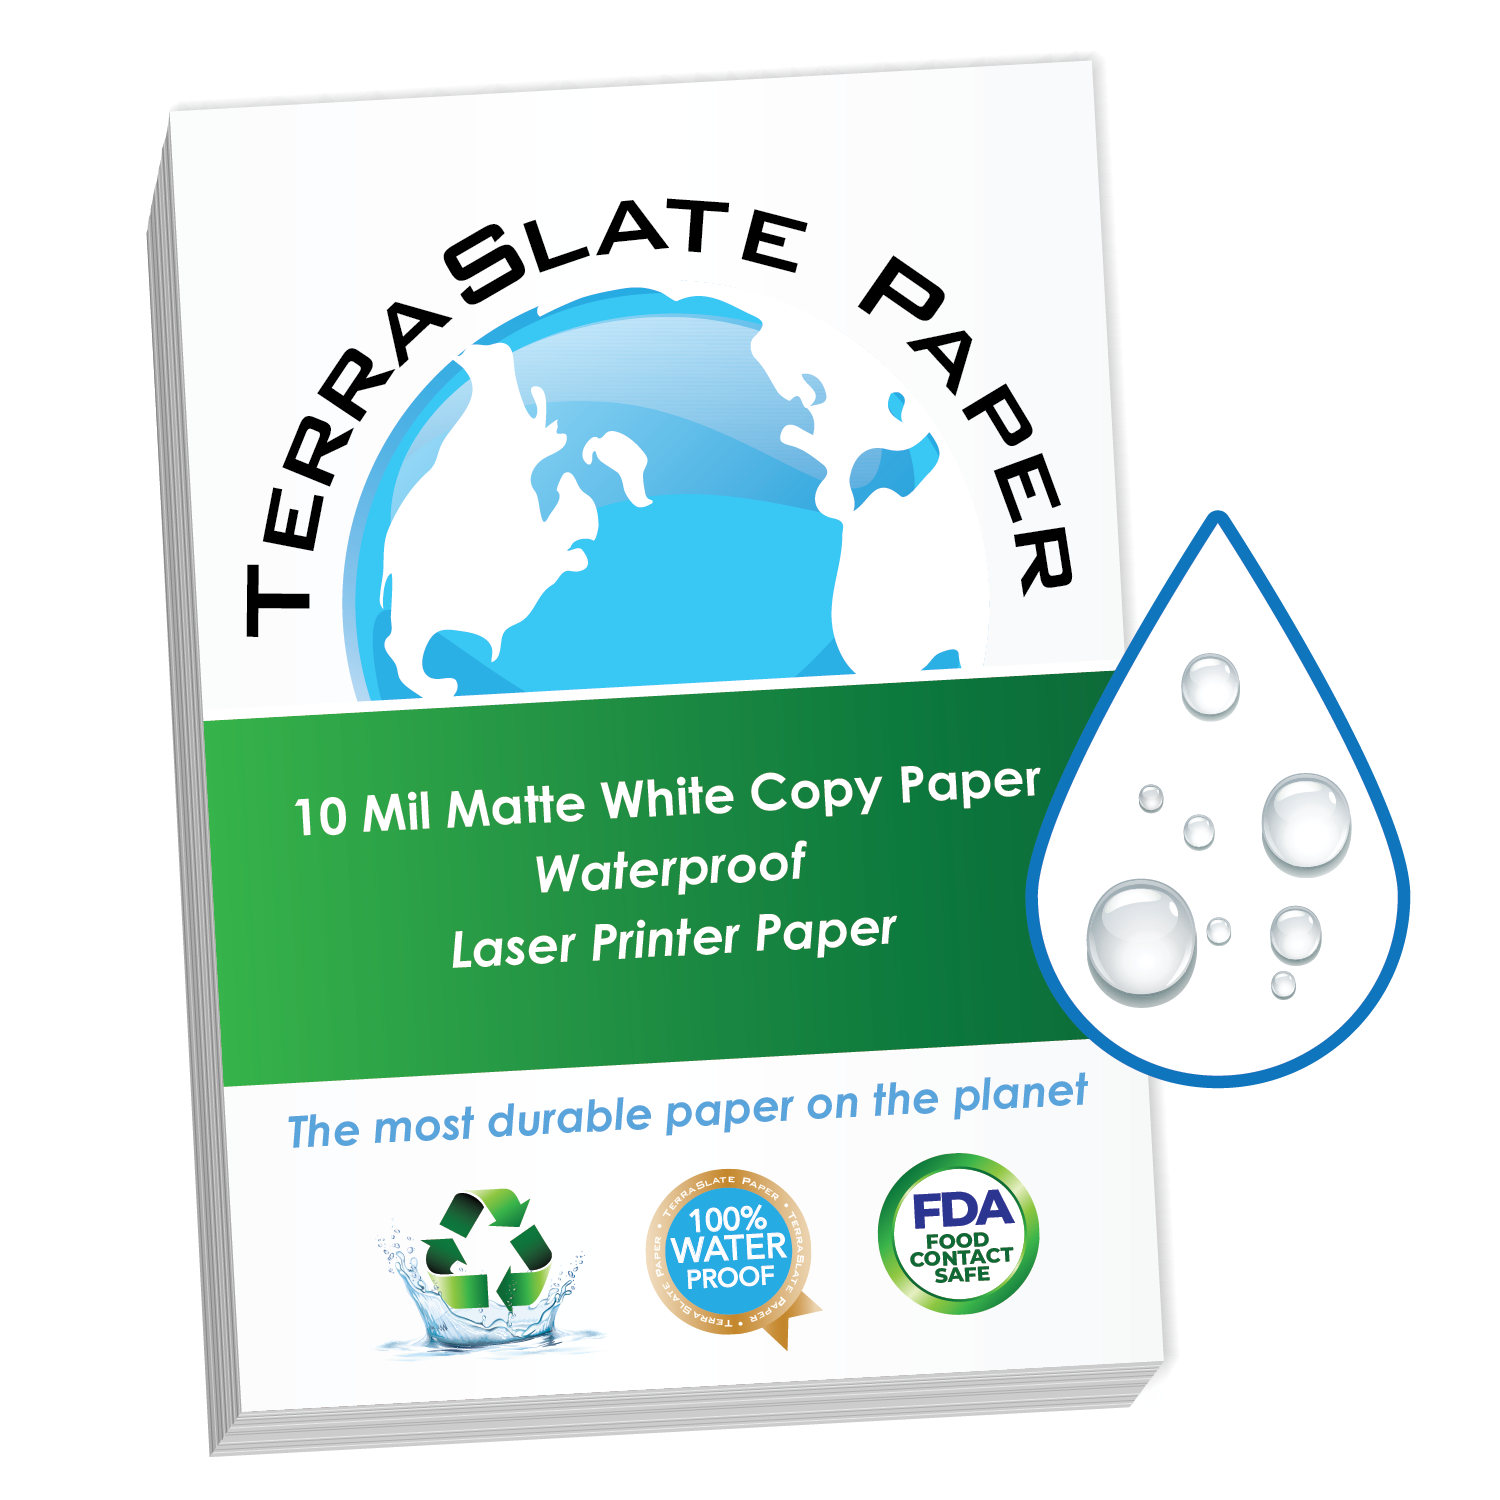 TerraSlate Waterproof Paper | 10 Mil 120lb Cover | 8.5" x 14" Legal Size | Waterproof Laser Printer Copy Paper | 50 Sheets - image 1 of 9